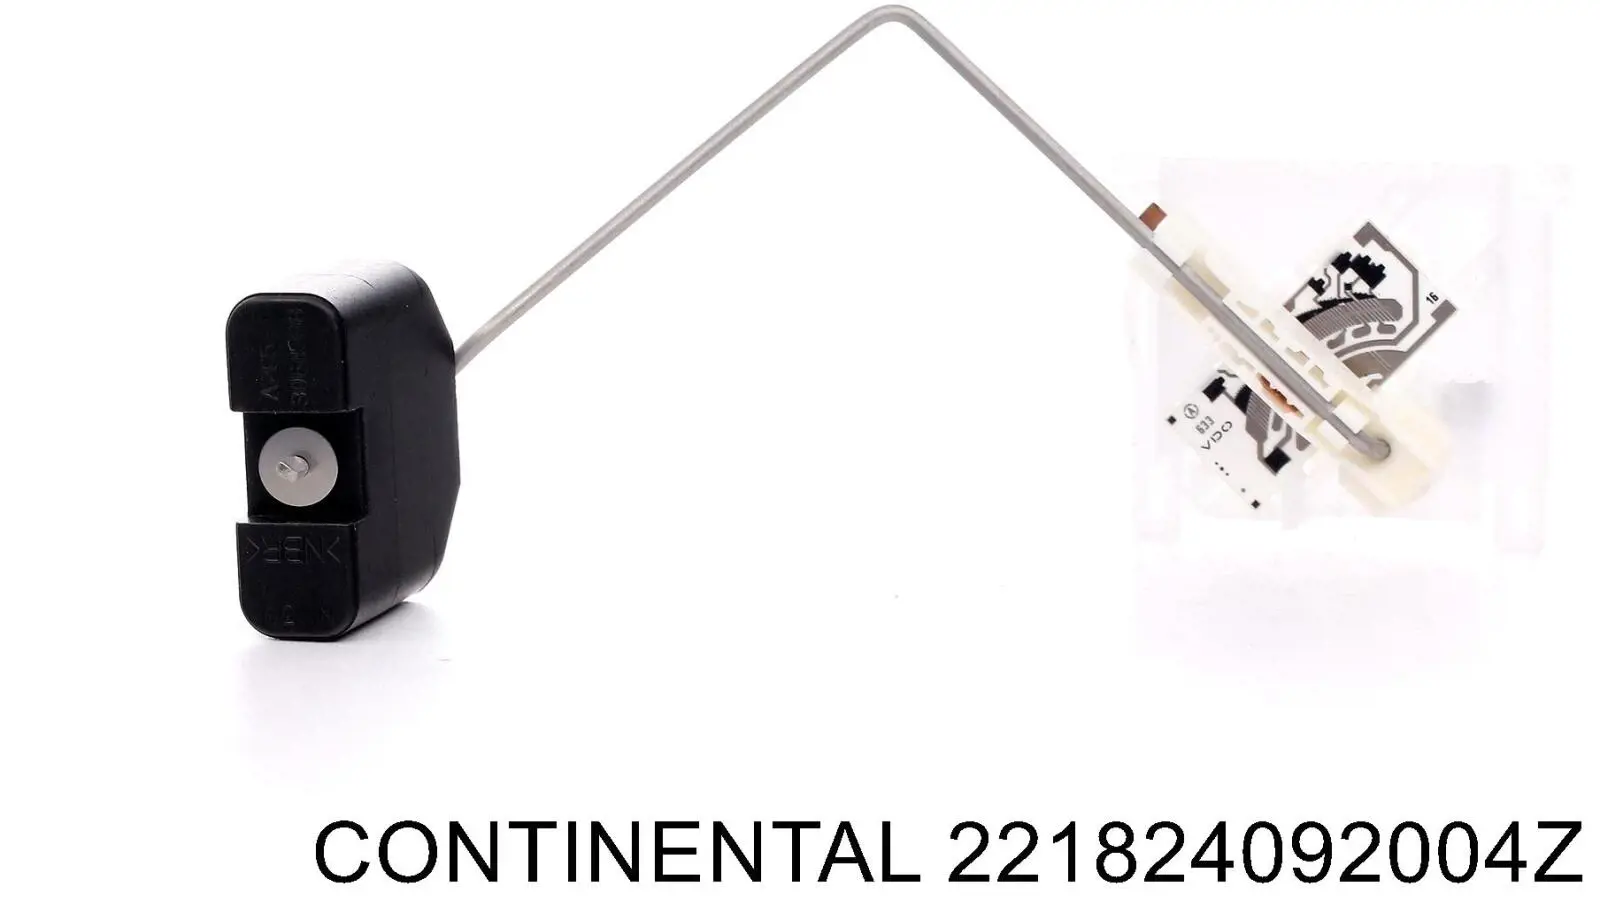 221-824-092-004Z Continental/Siemens датчик уровня топлива в баке